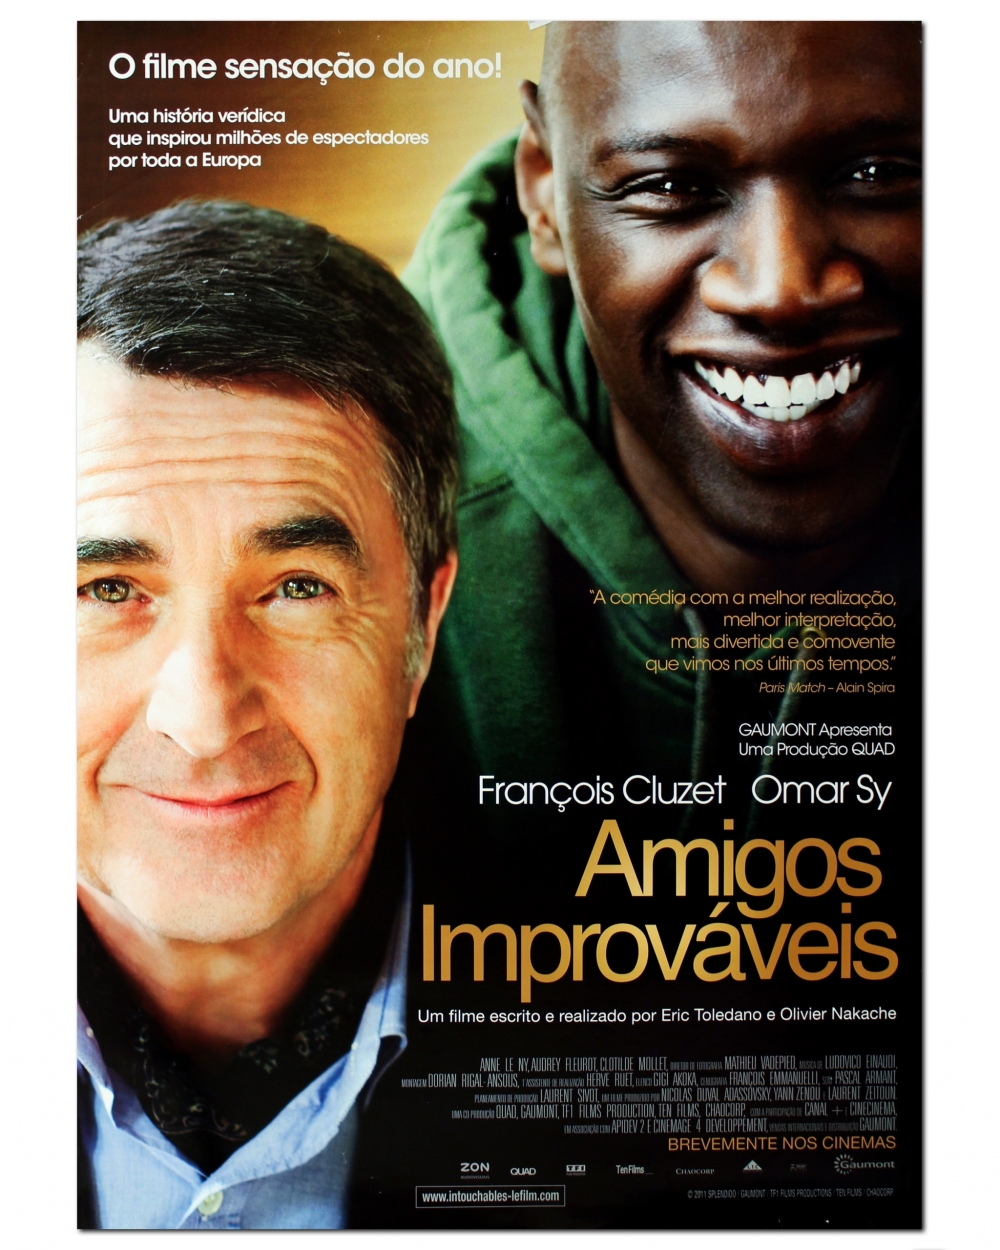 Amigos Improváveis (Olivier Nakache e Éric Toledano, 2011)